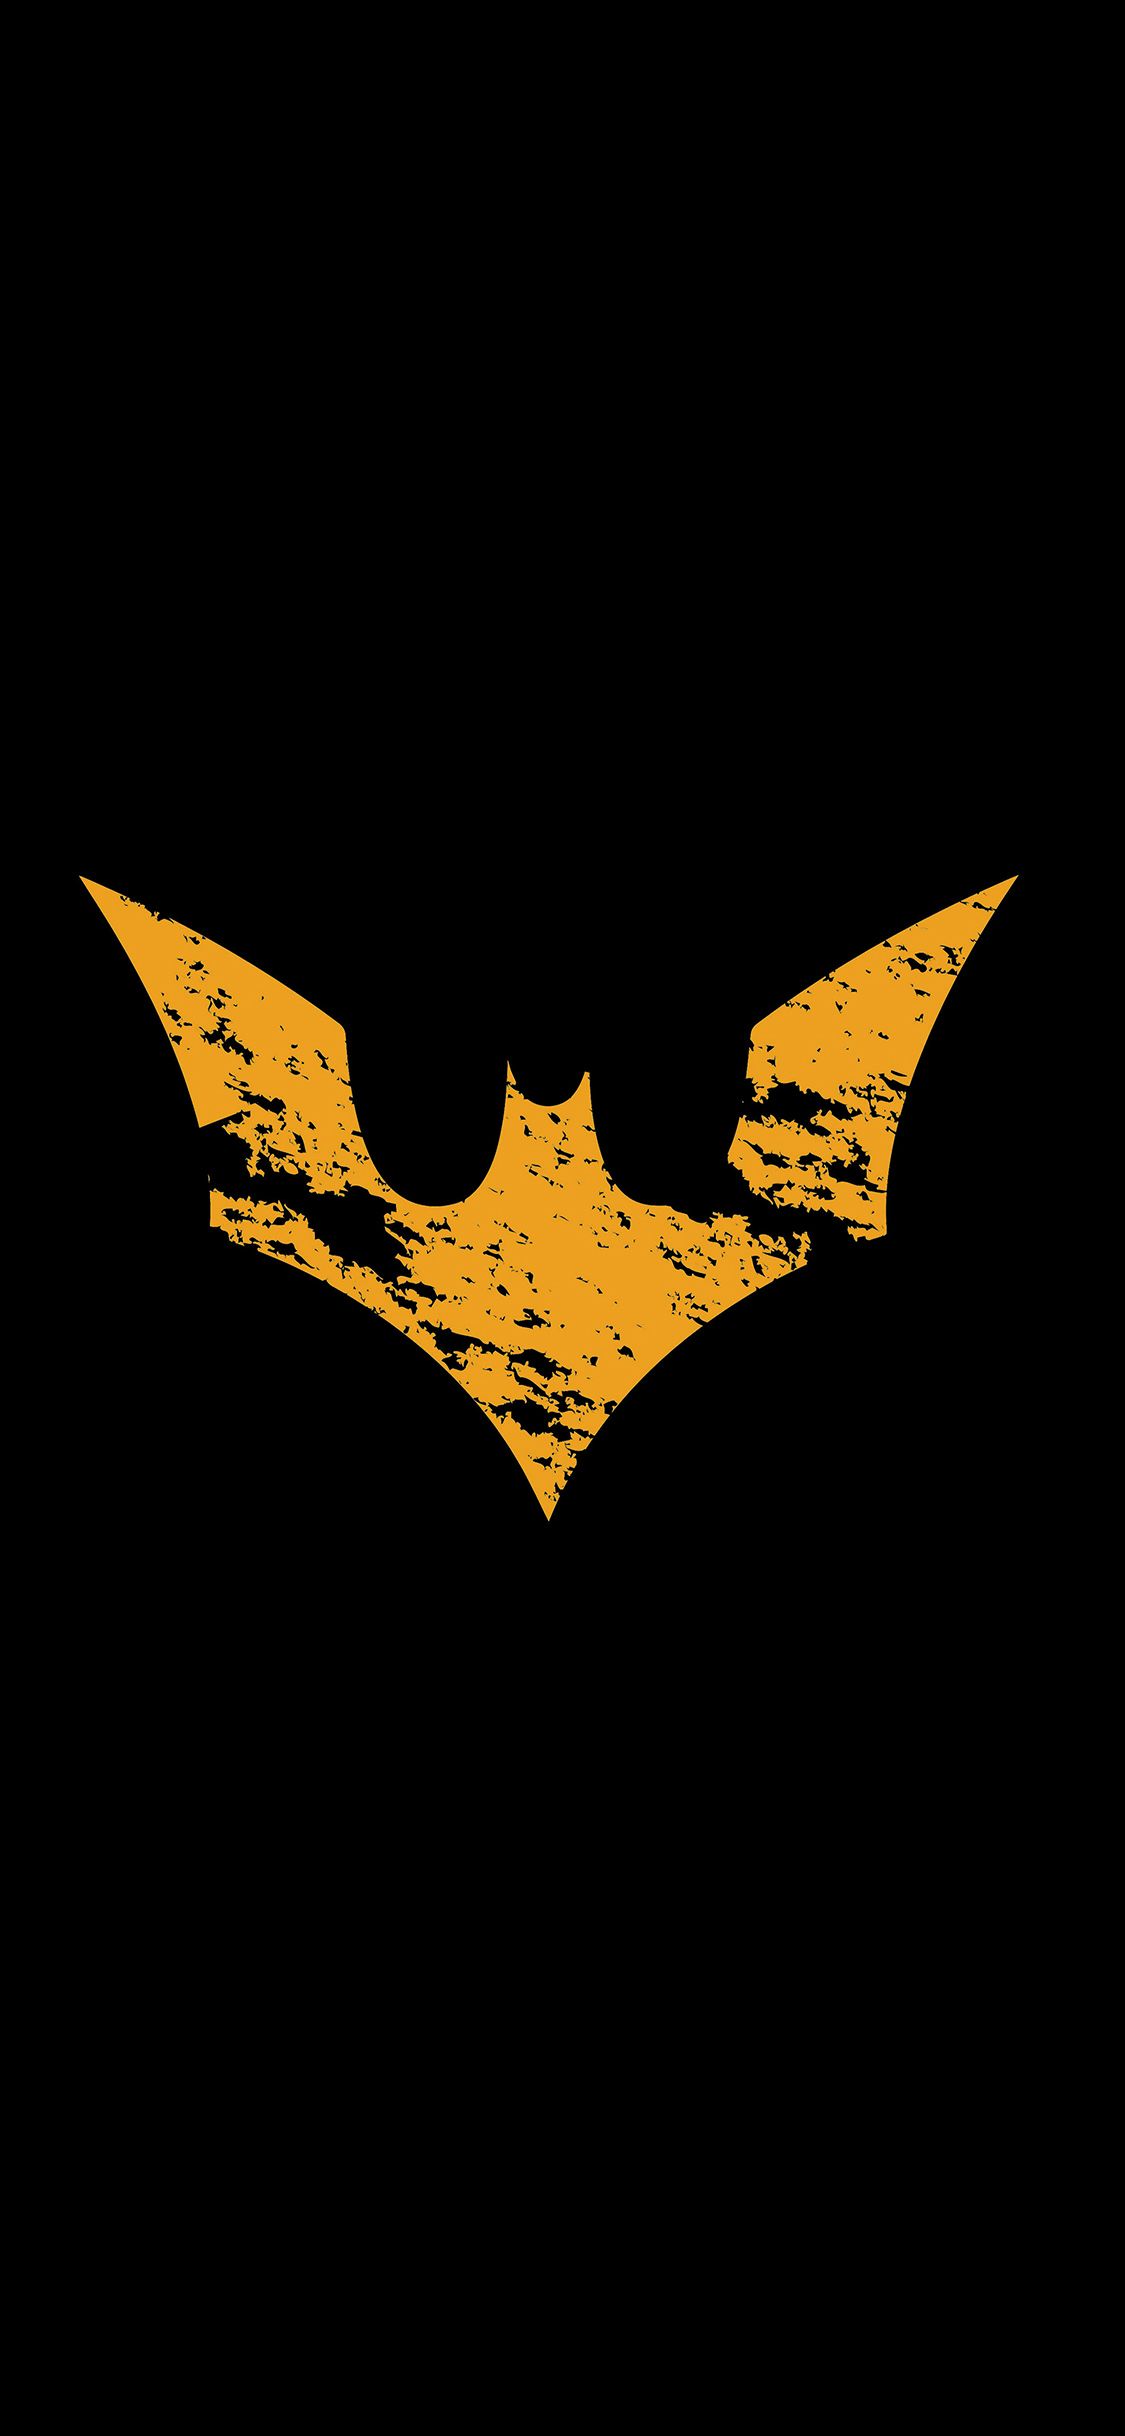 iPhone wallpaper. batman logo yellow dark